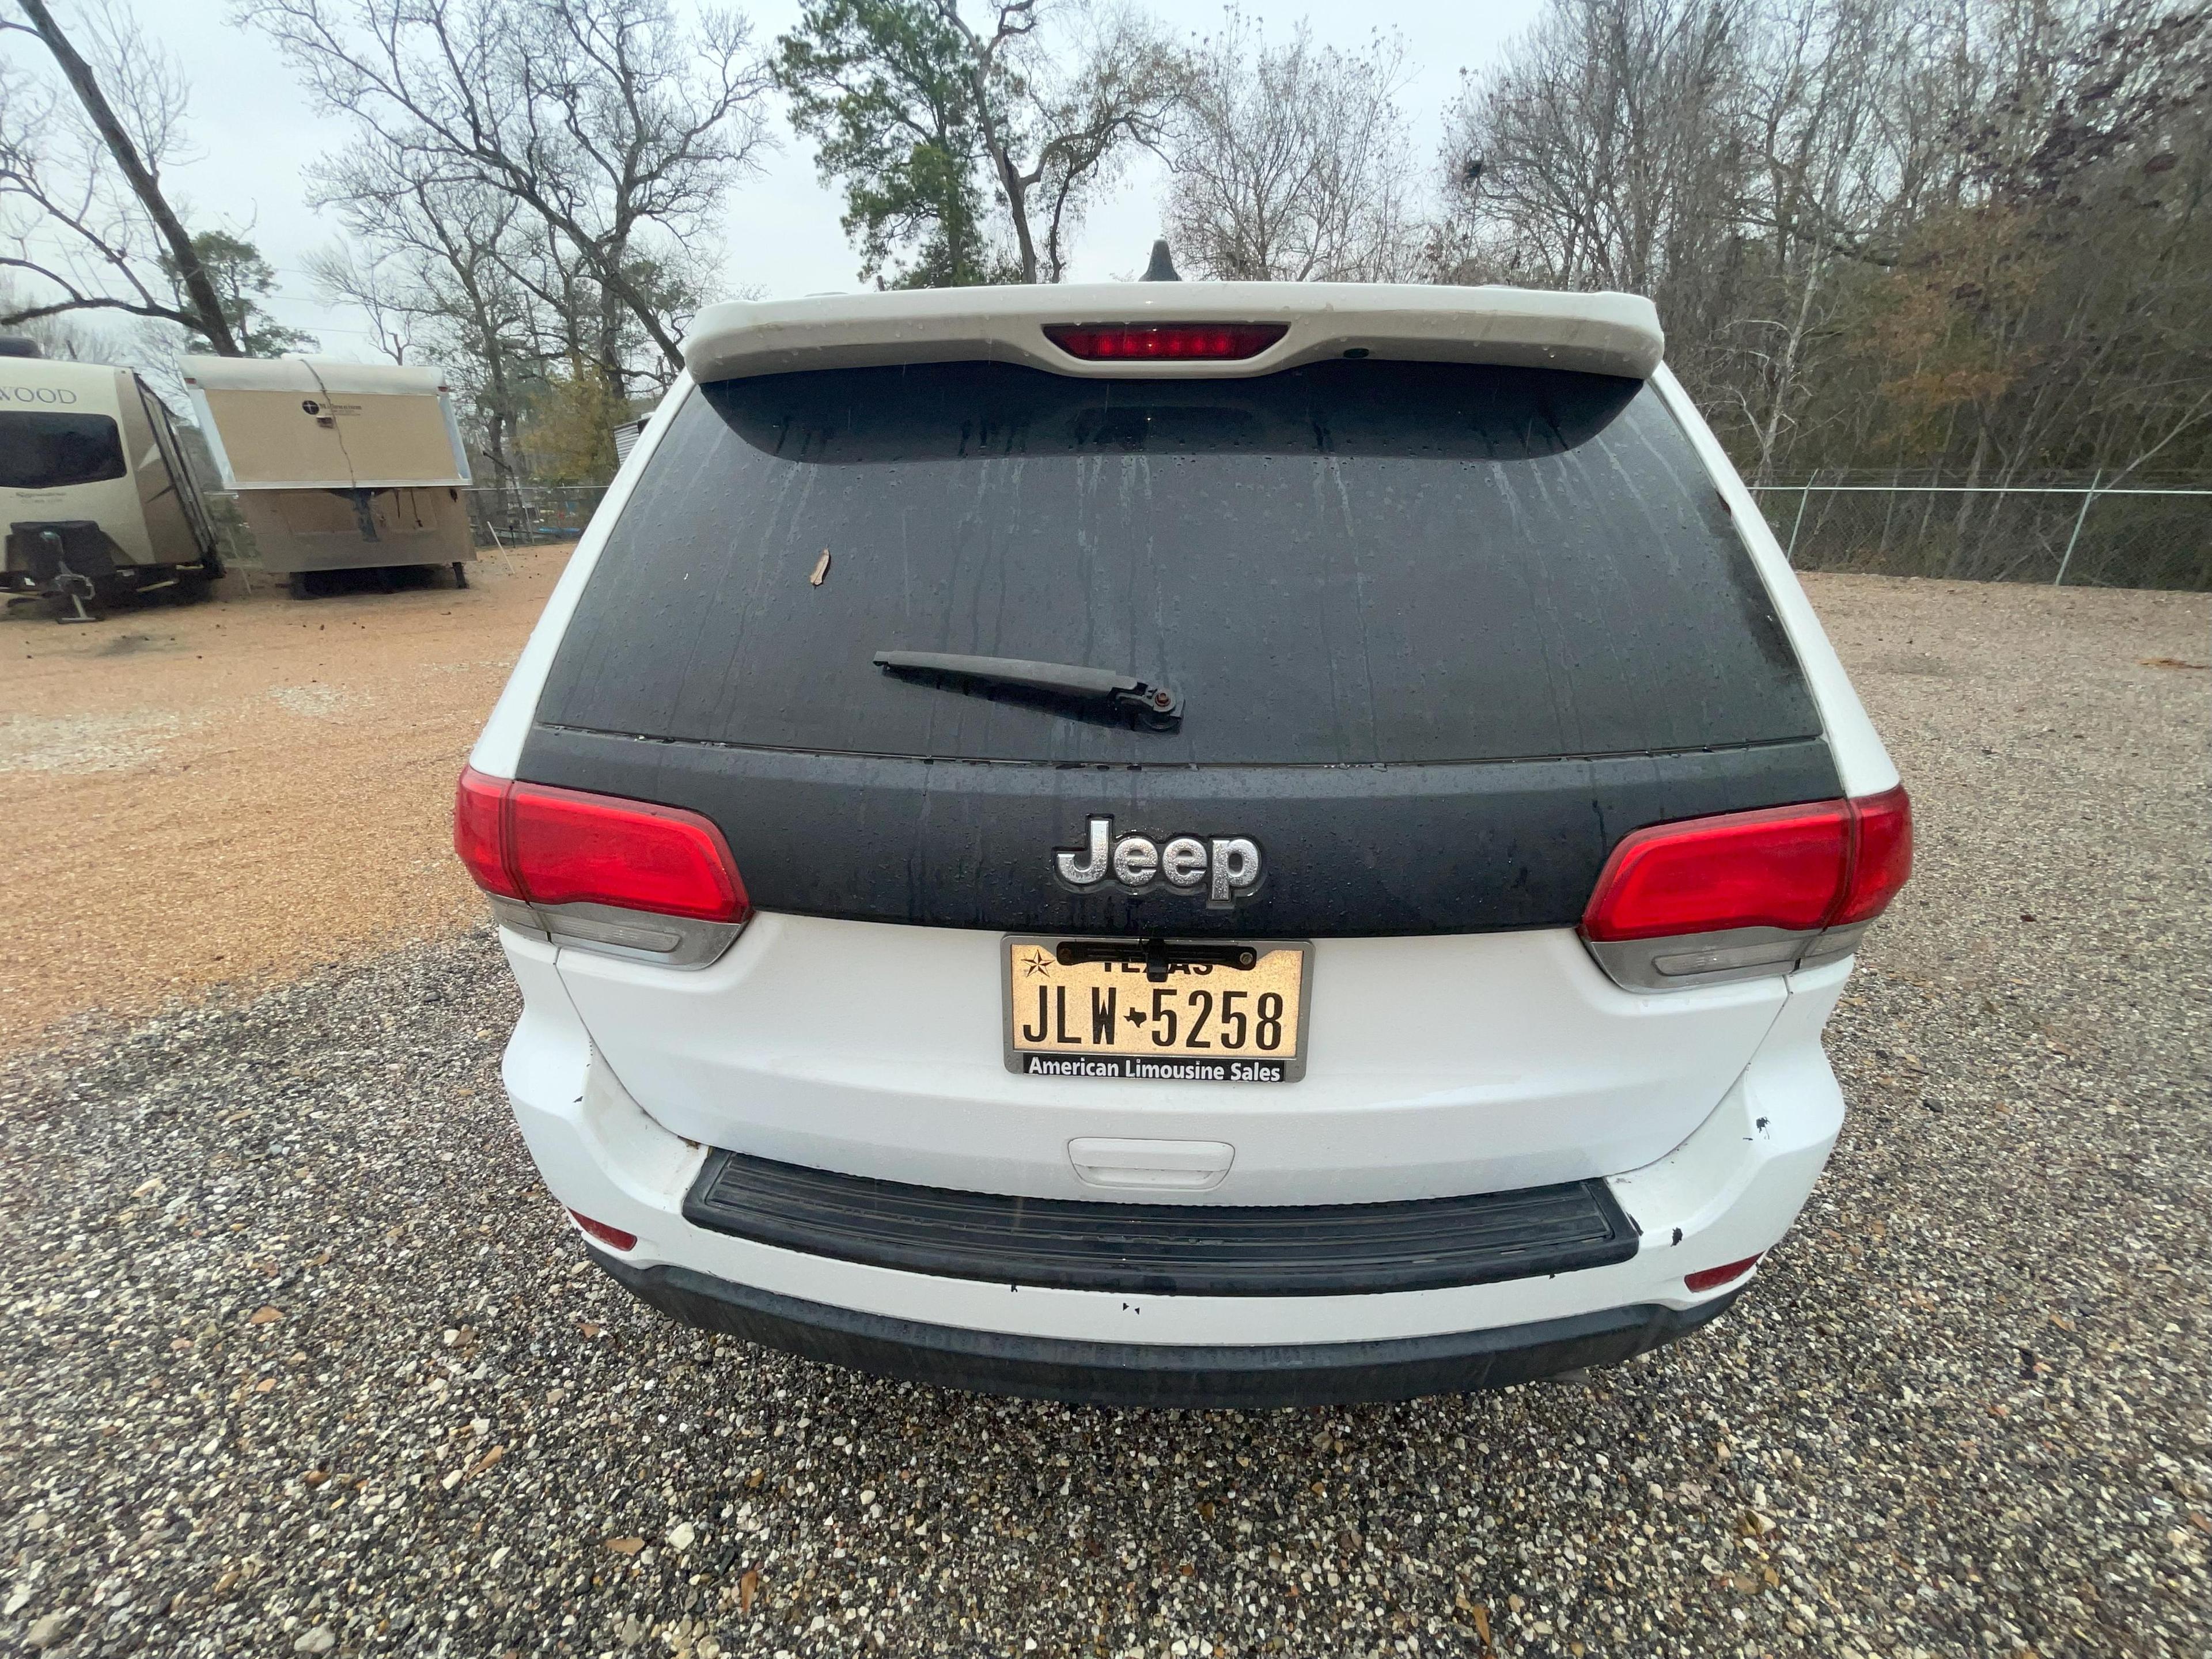 LOCATION PORTER, TX; 2015 Chrysler Jeep Grand Cherokee 4-Door Limousine, VIN# 1C4RJEAG0FC694029, 650